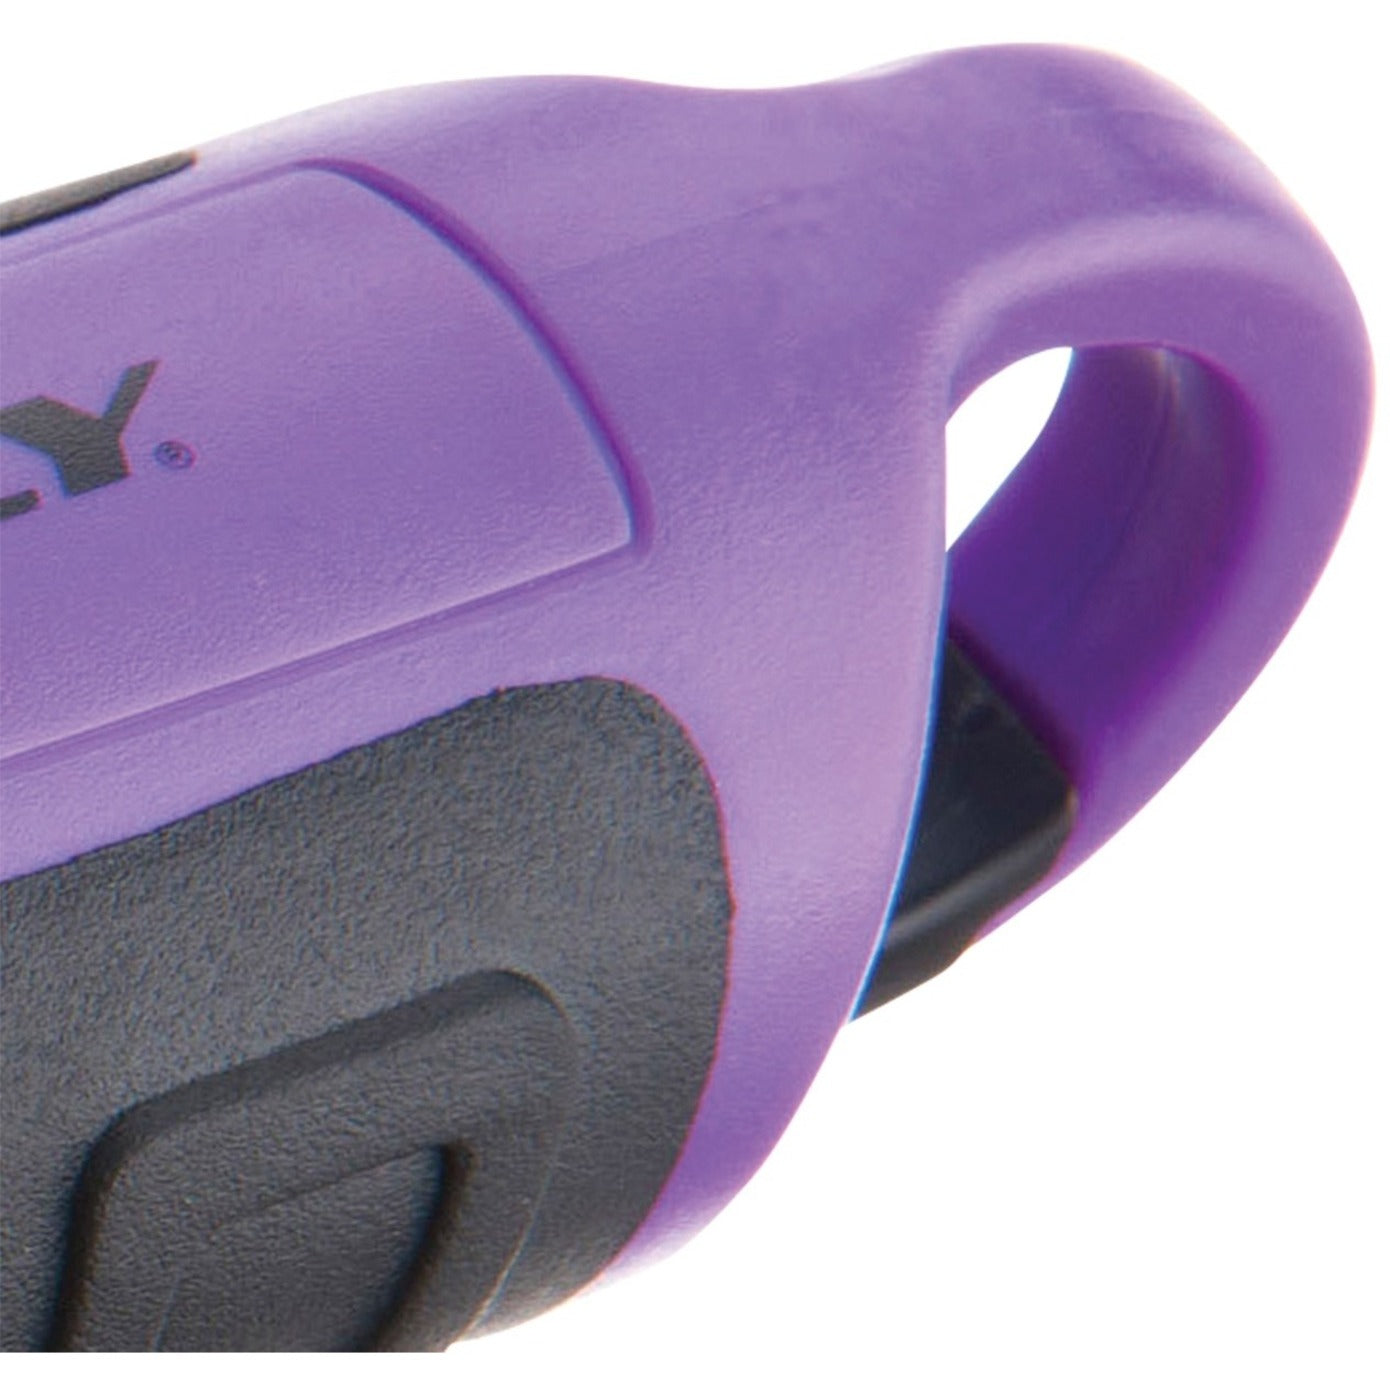 Dorcy 41-2508 55 Lumen Purple Floating Flashlight, Water Proof, Shock Absorbing, Slip Resistant, Battery Powered